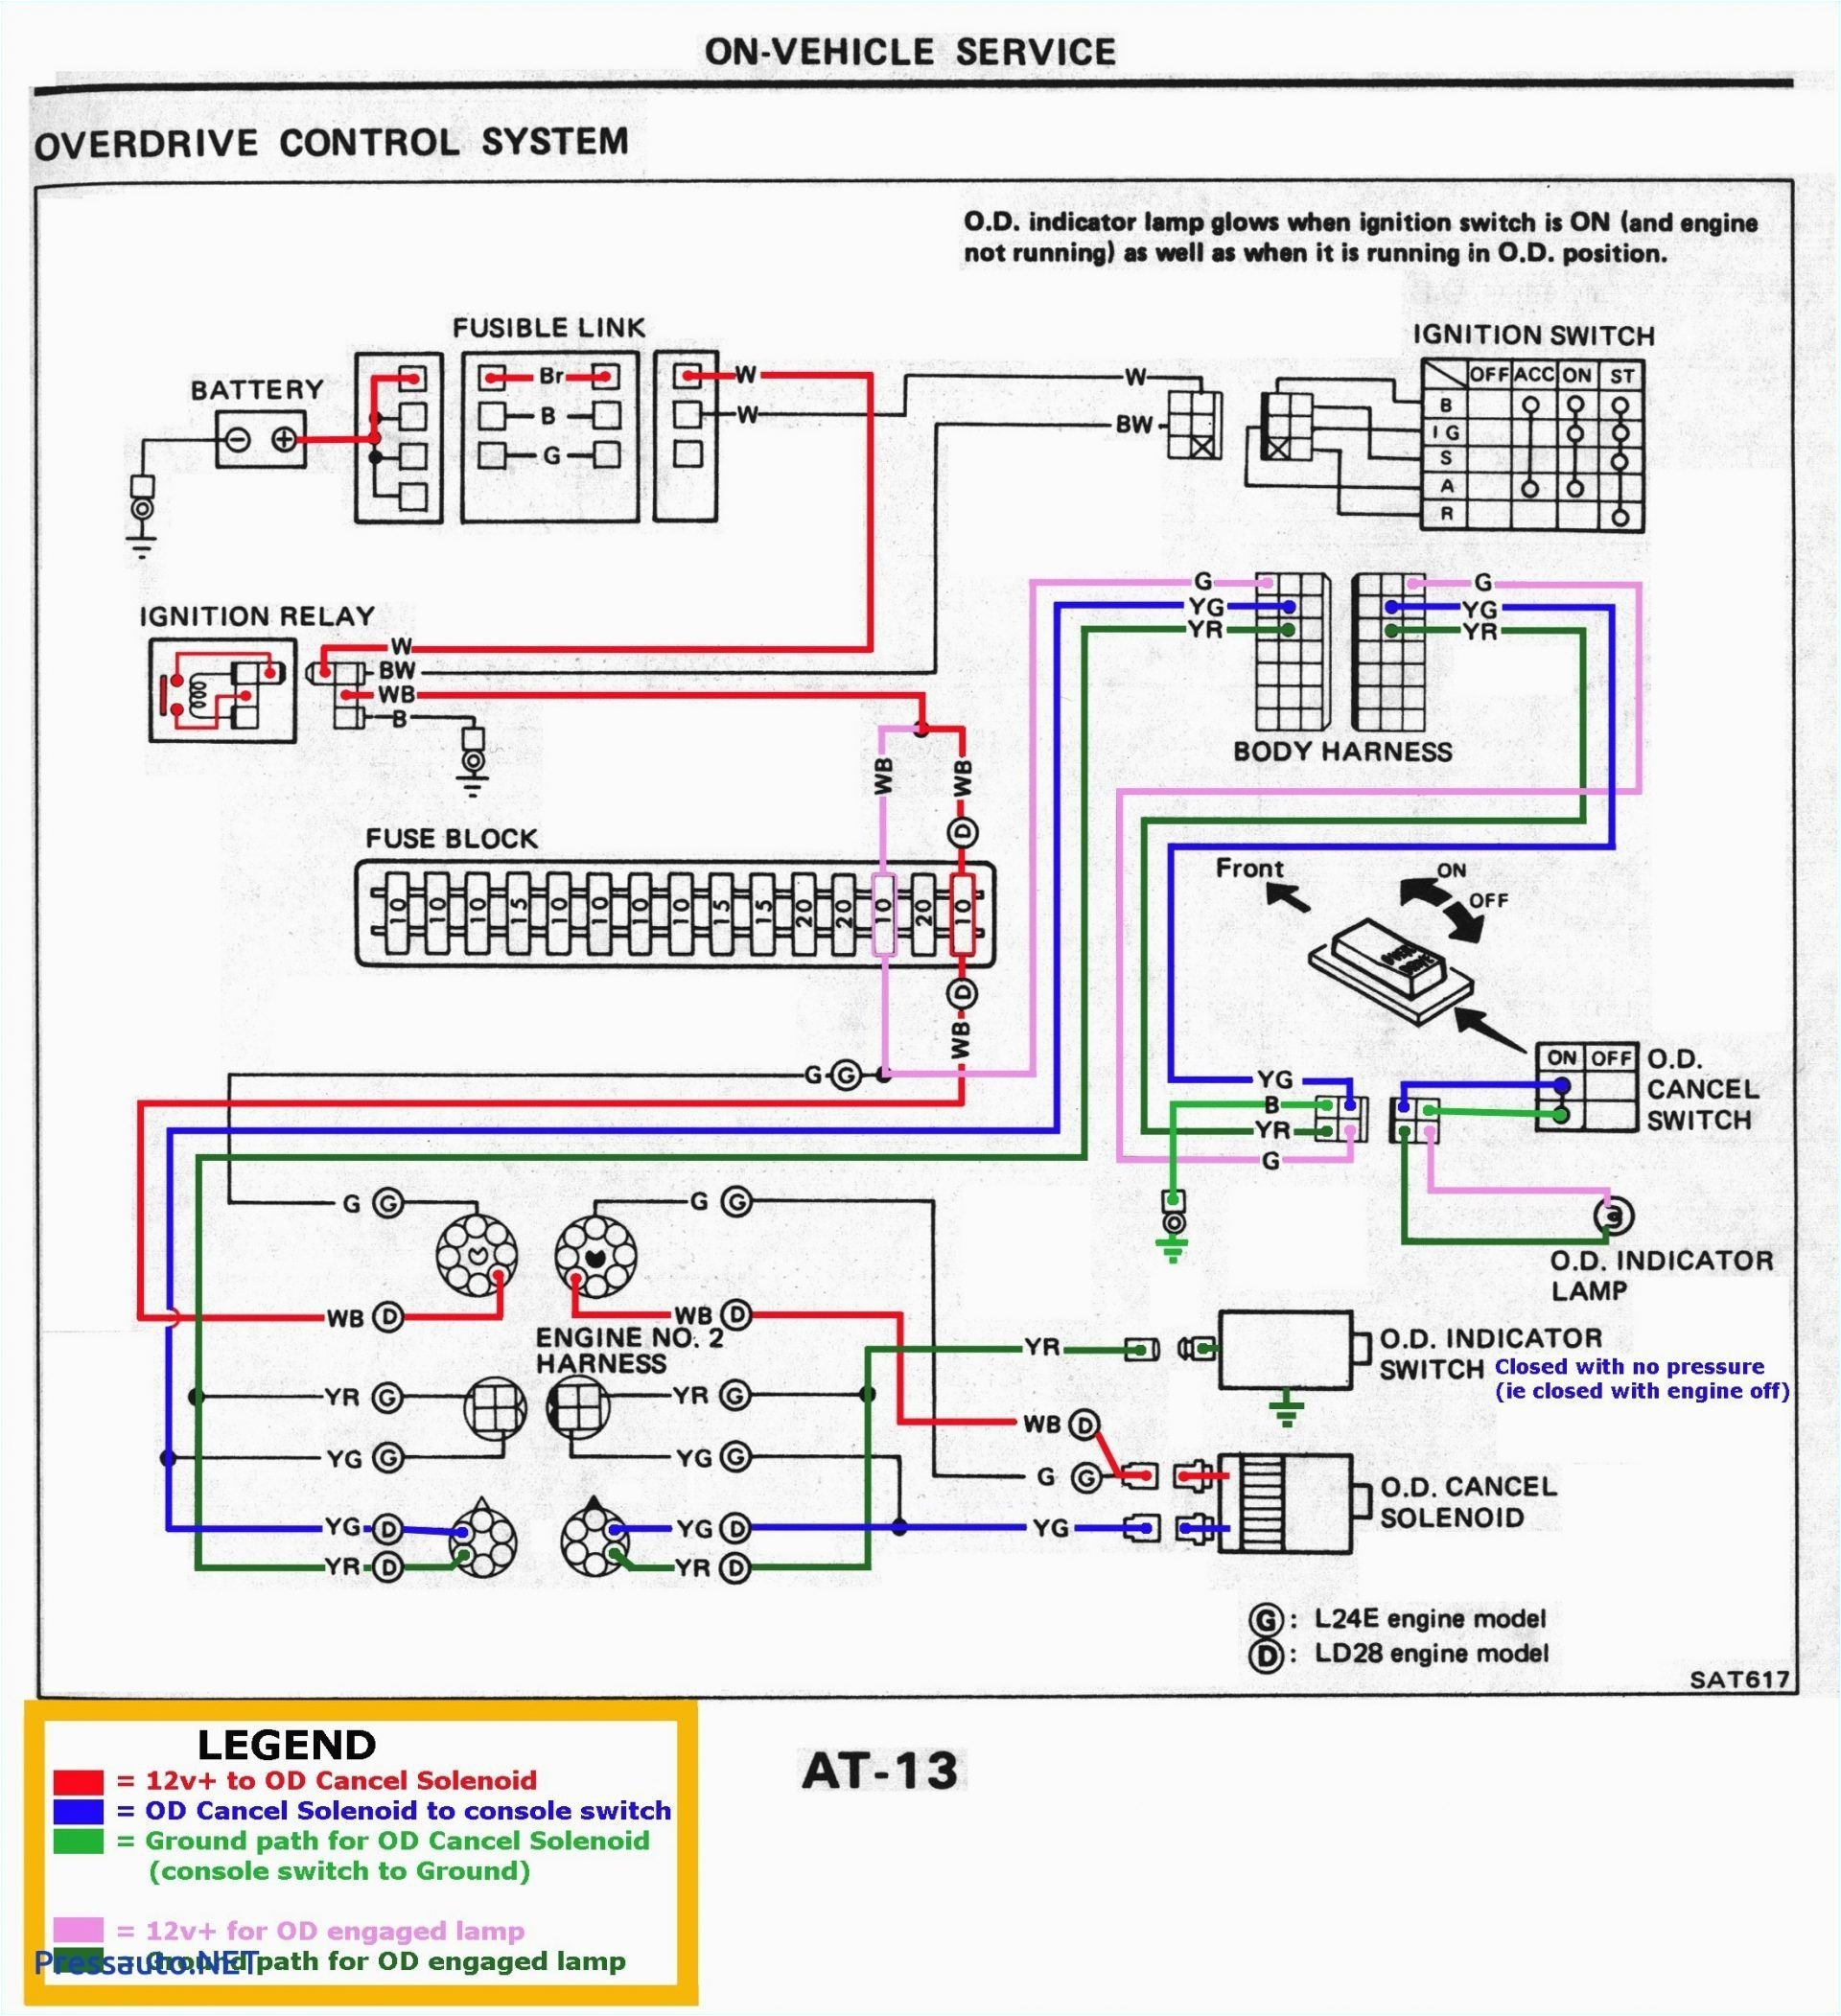 diions wiring diagram wiring diagram perfomancefuse box wires sr14 wiring diagram world diions wiring diagram